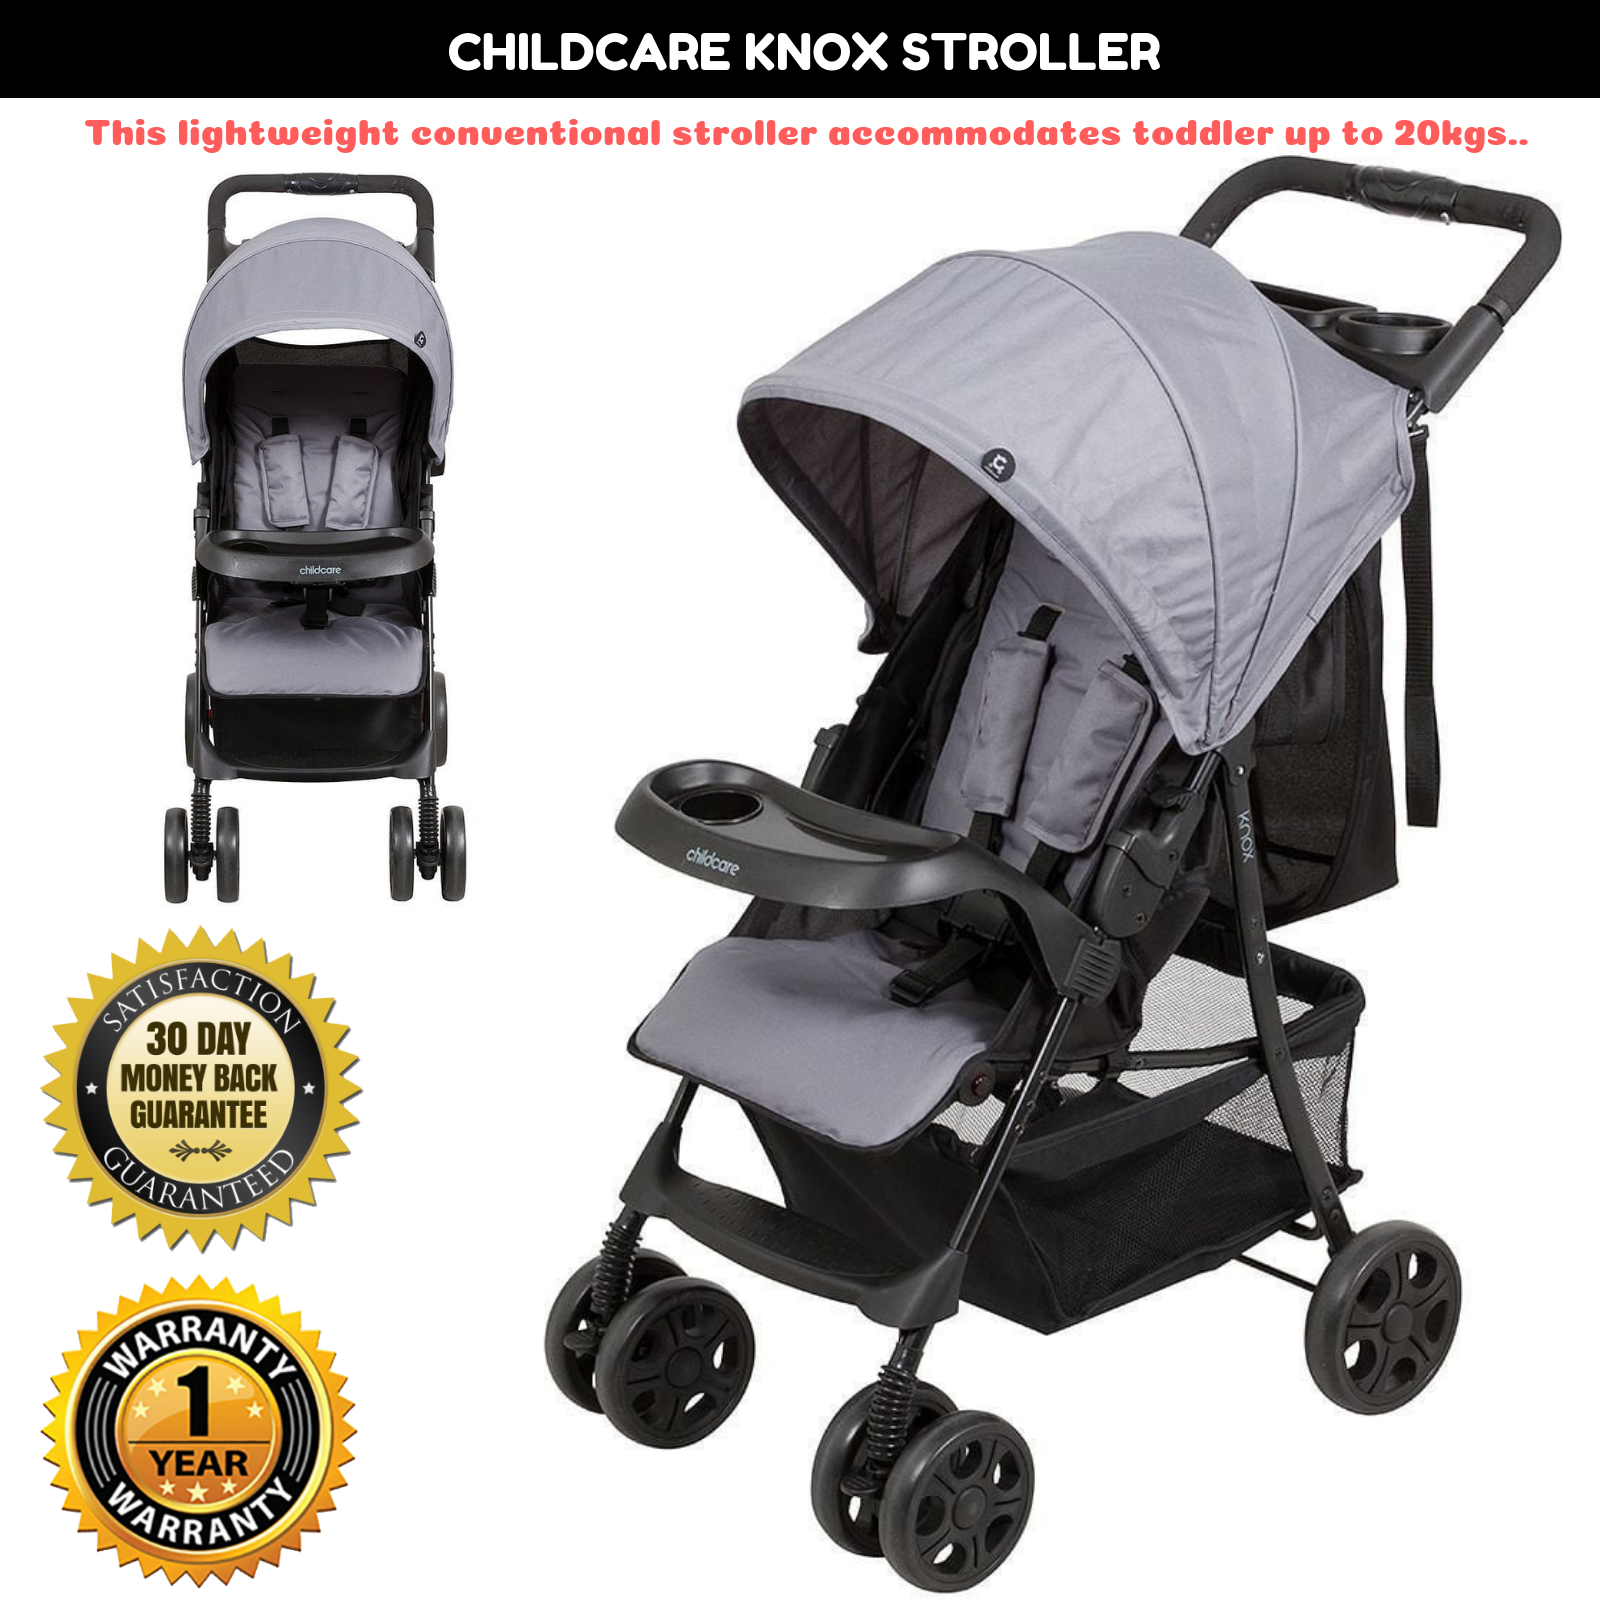 childcare knox stroller